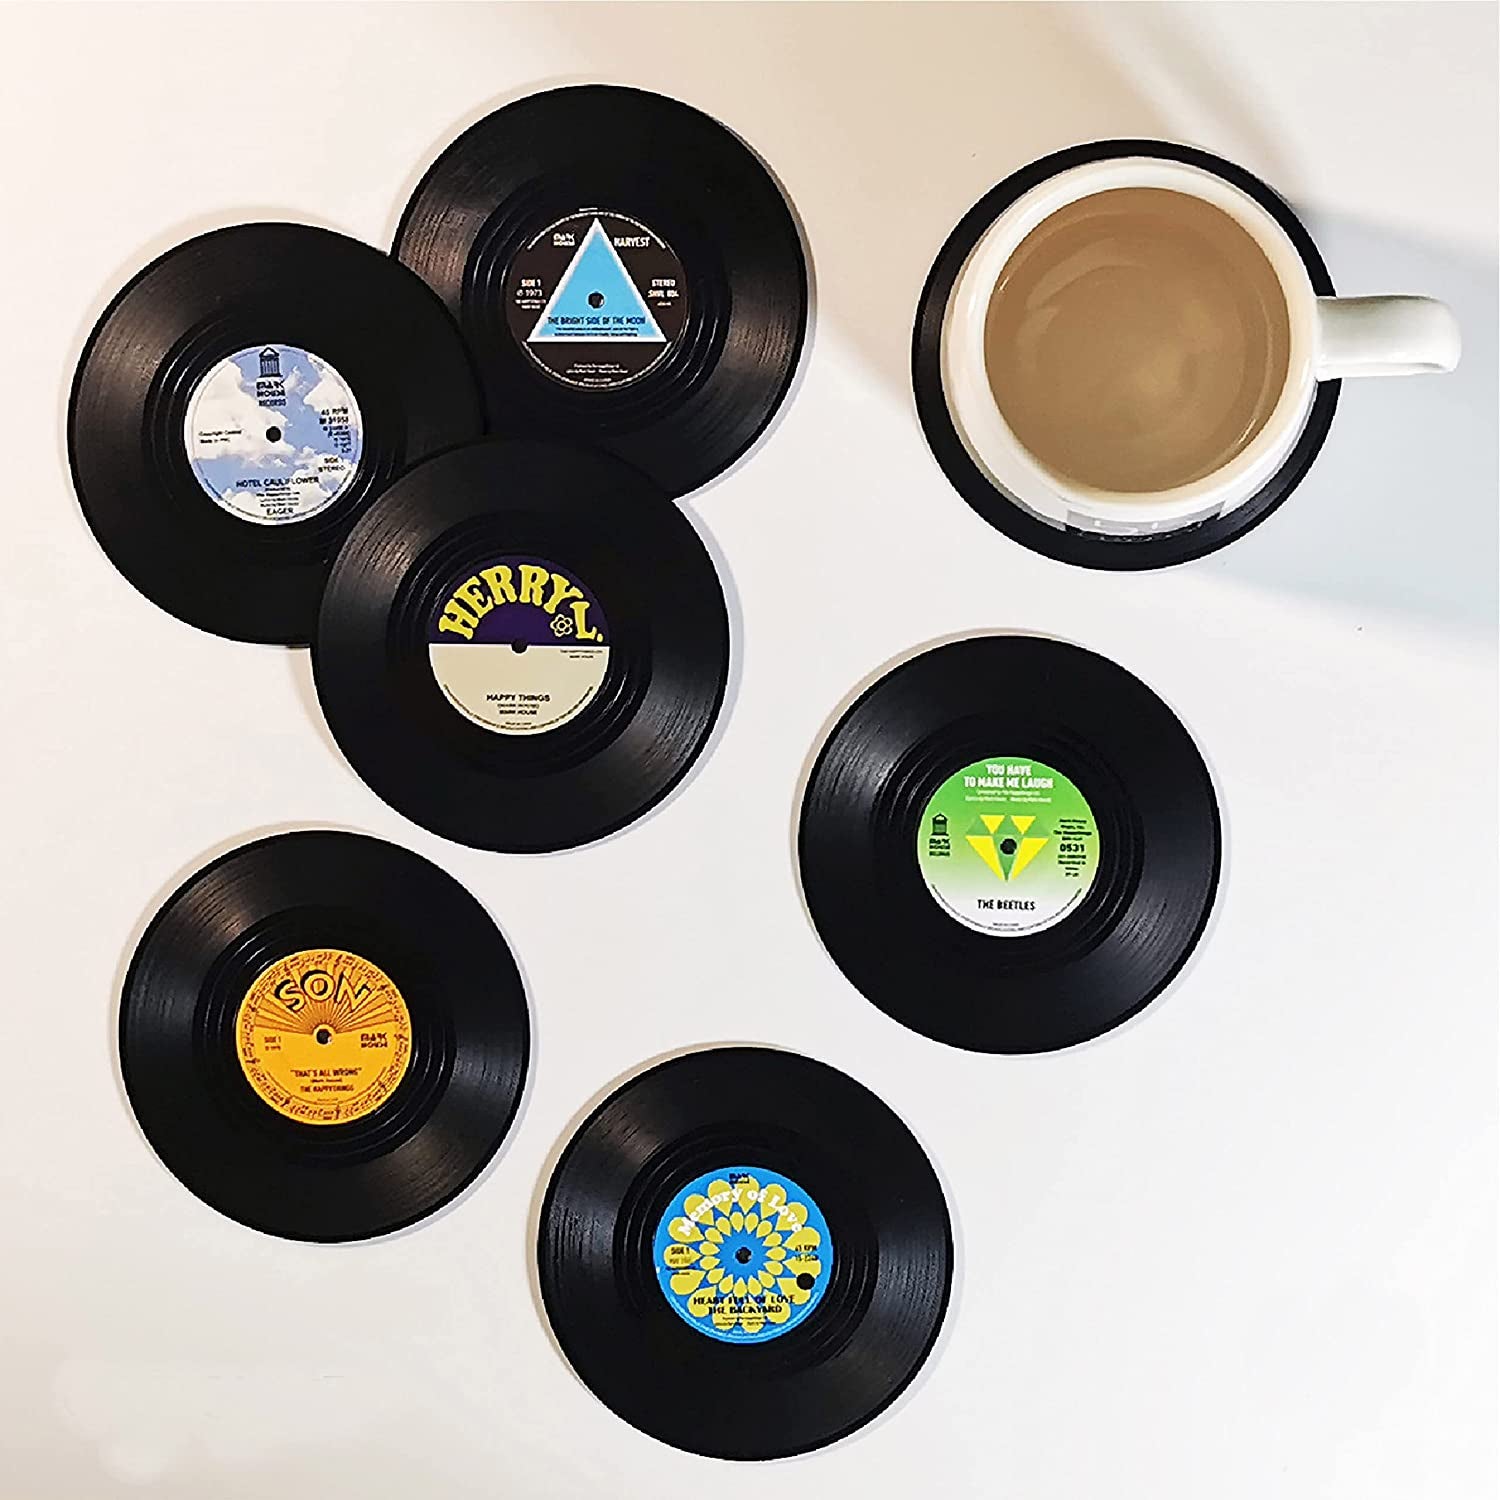 the set of vinyl record coasters